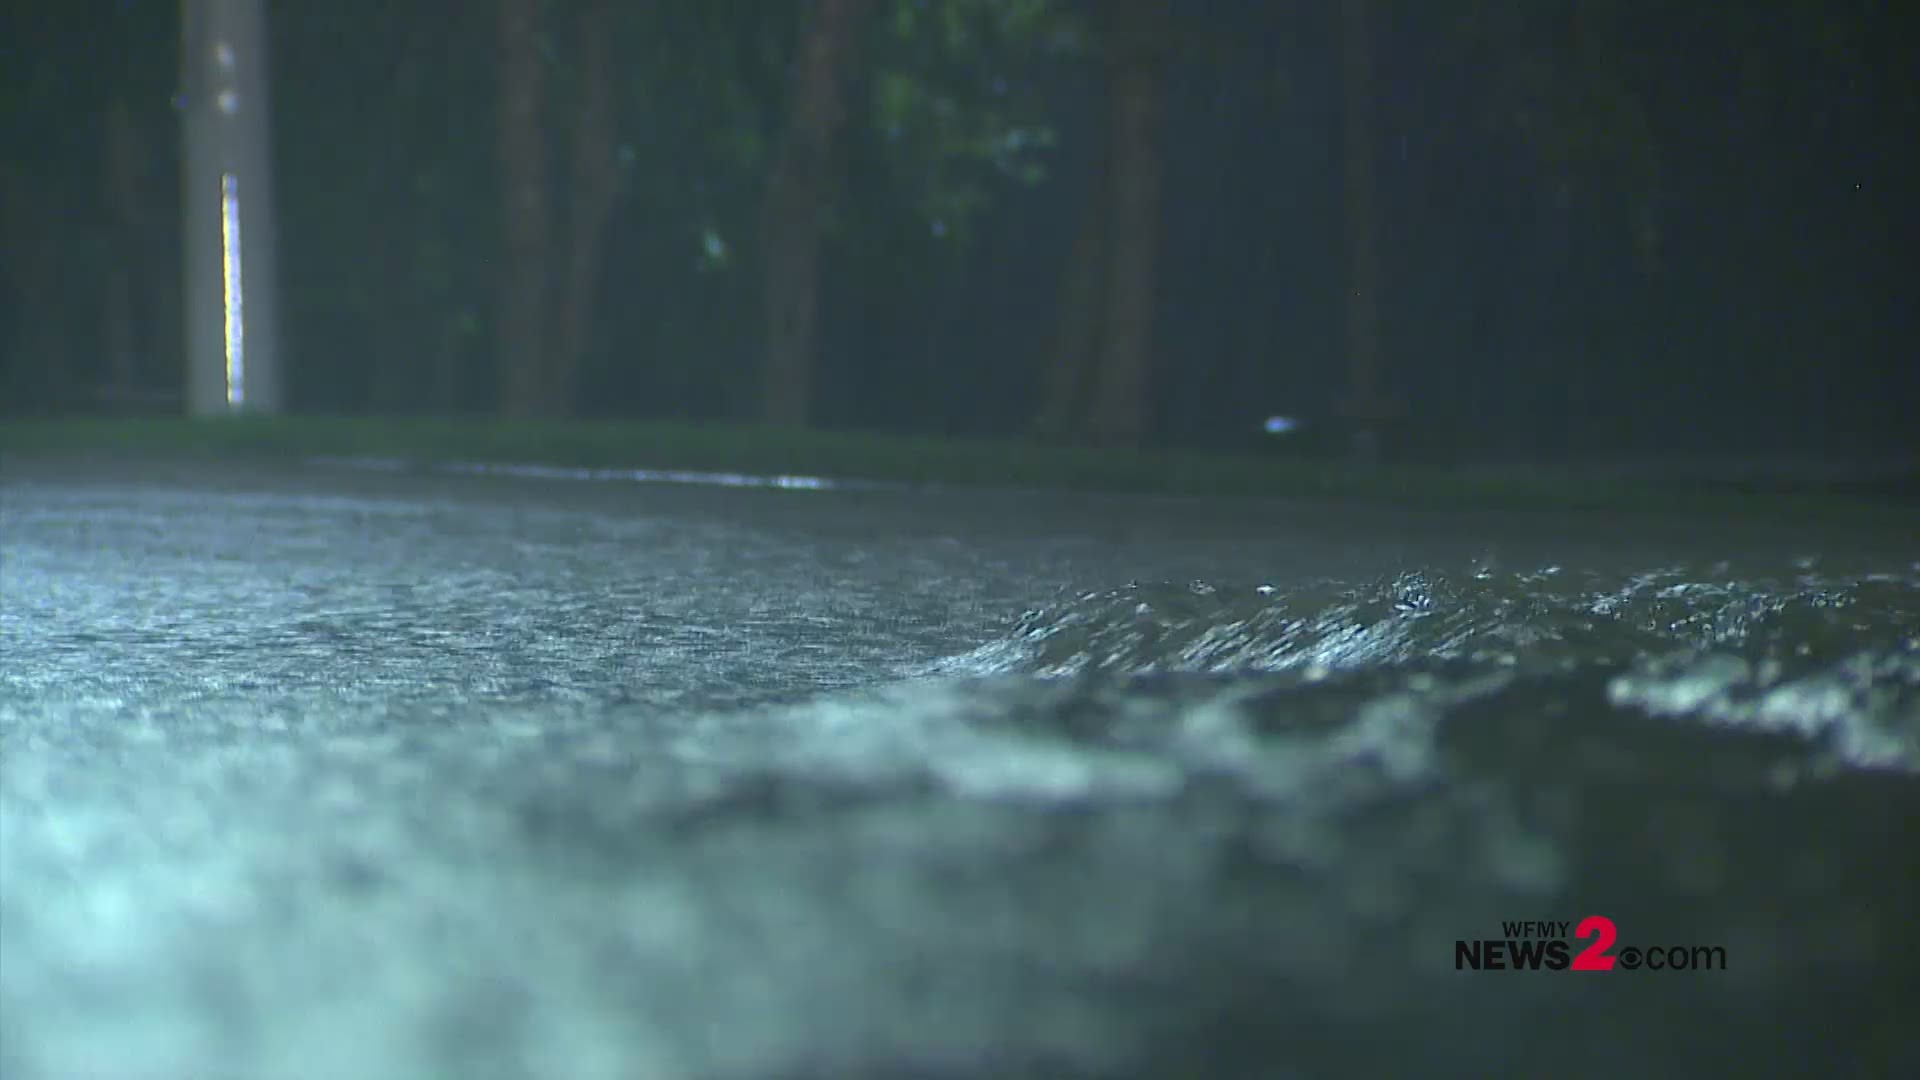 Florence brings rain and flooding across NC.